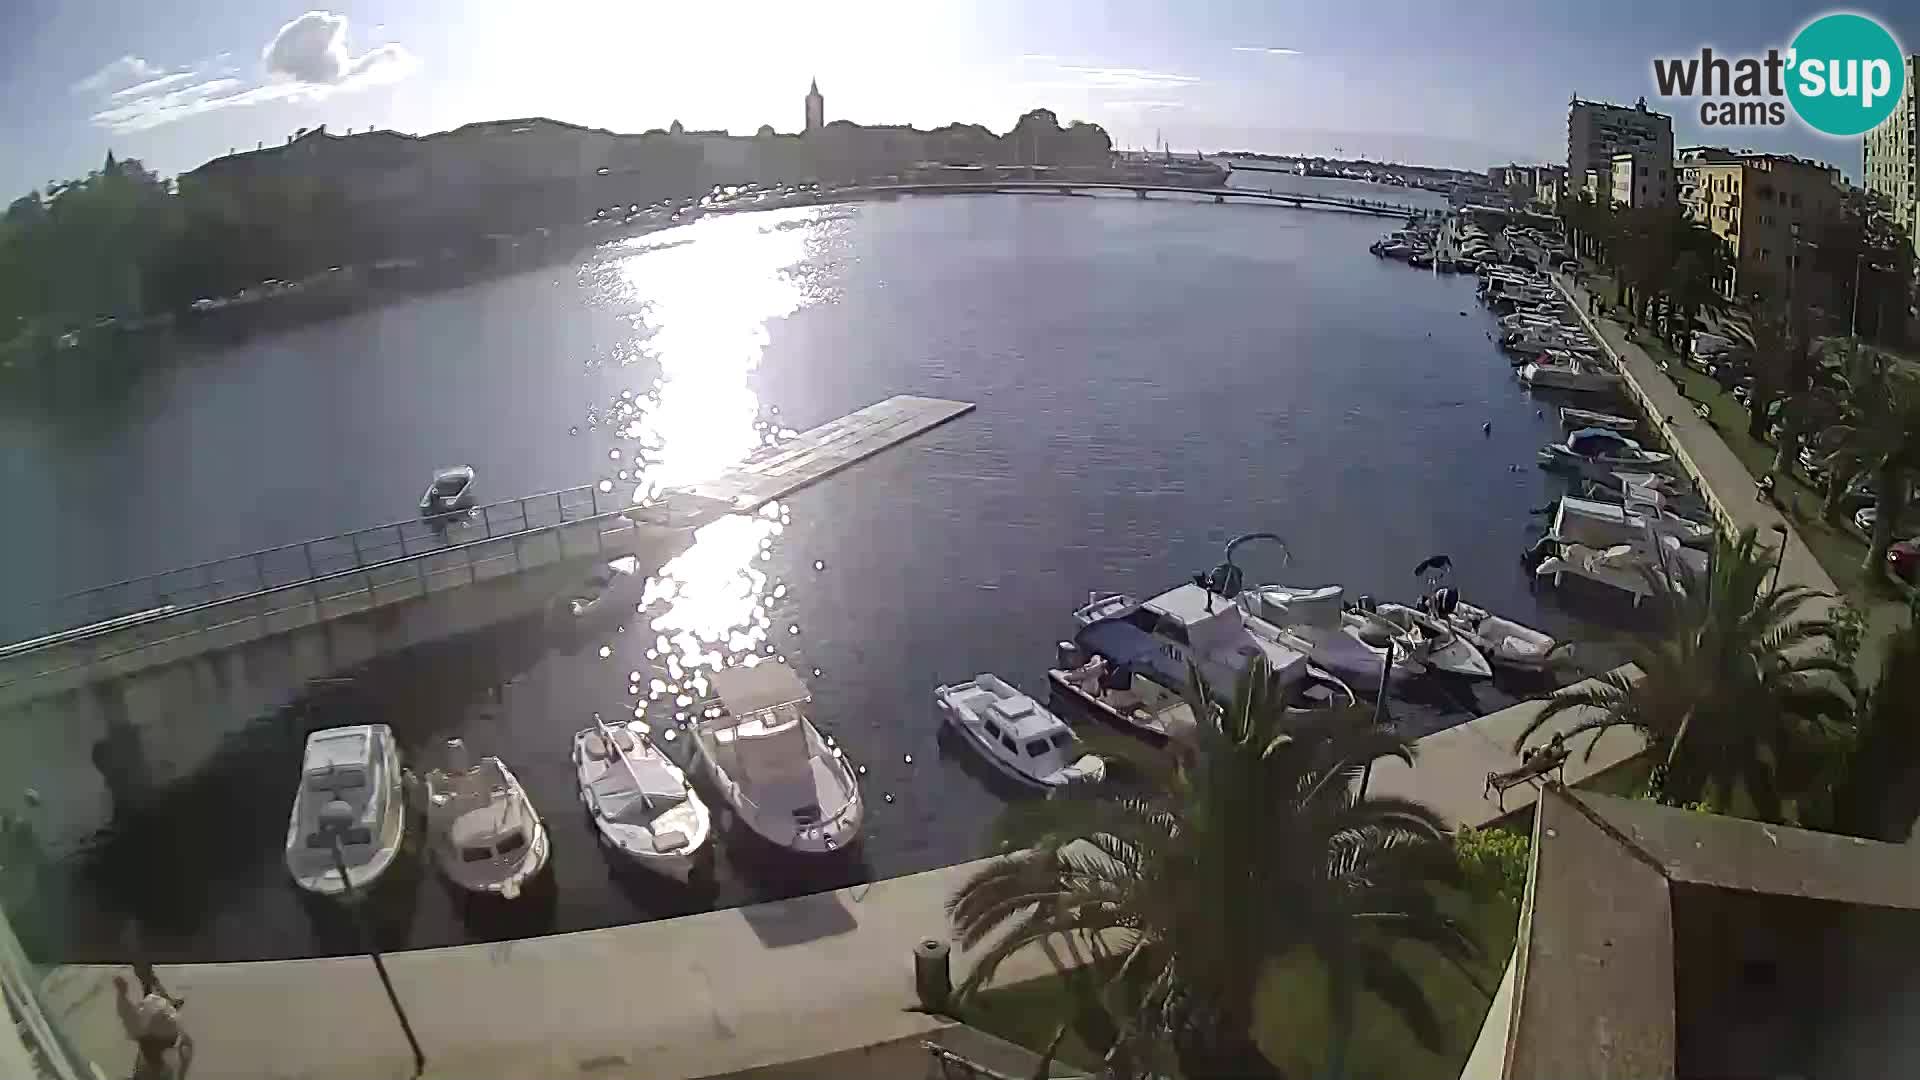 Zadar – Rowing club Jadran